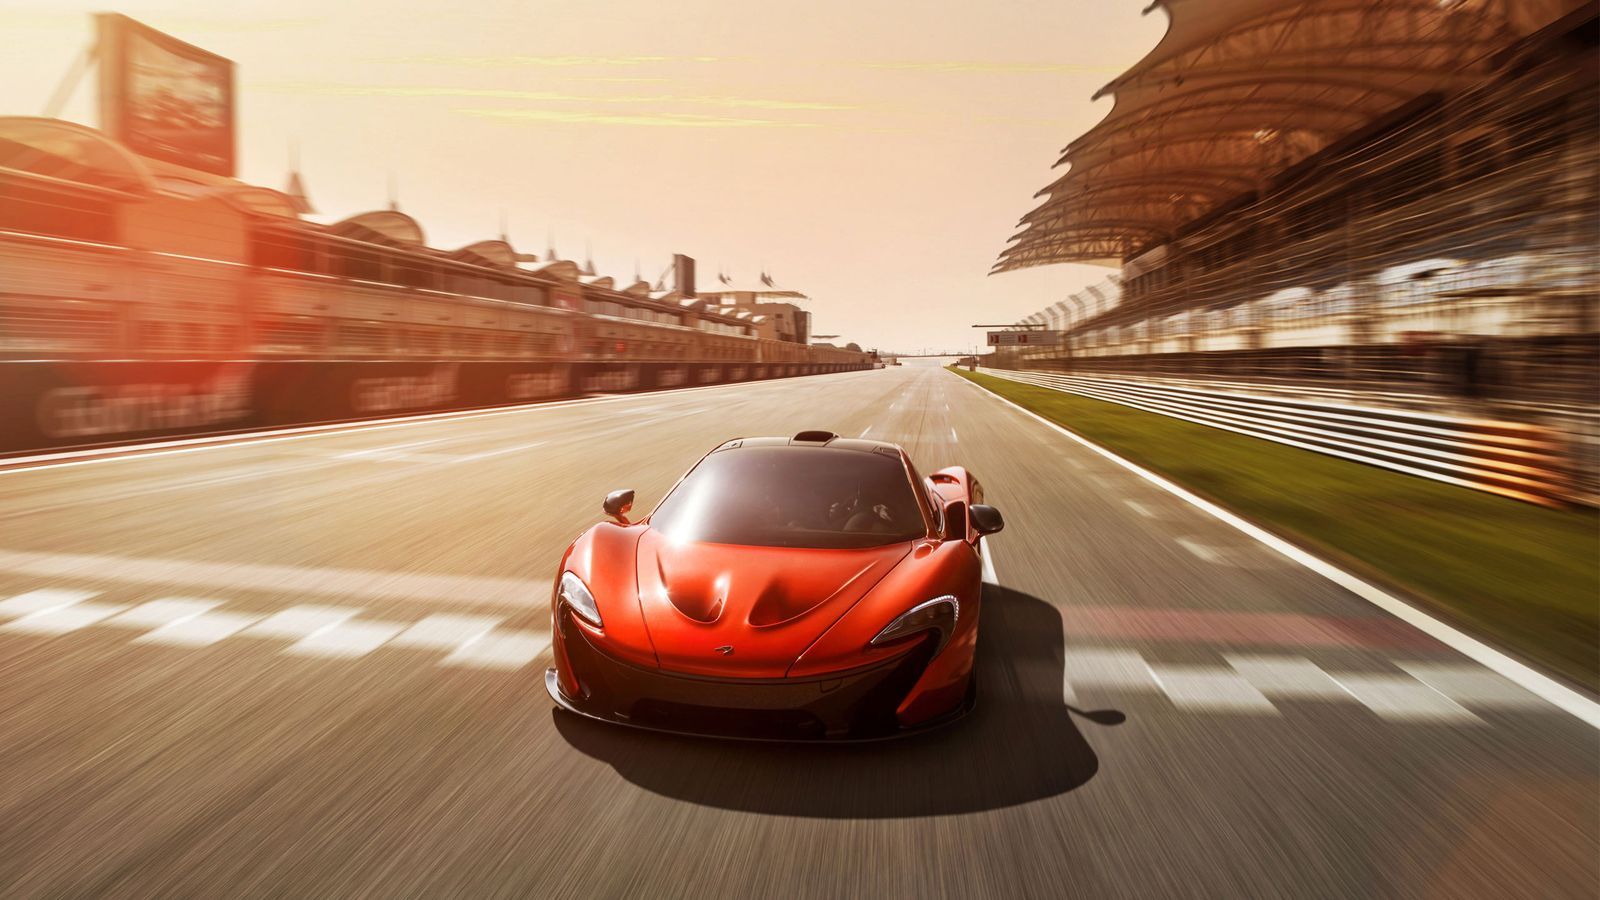 McLaren supercar wallpaper download 49690 - Automotive Wallpapers